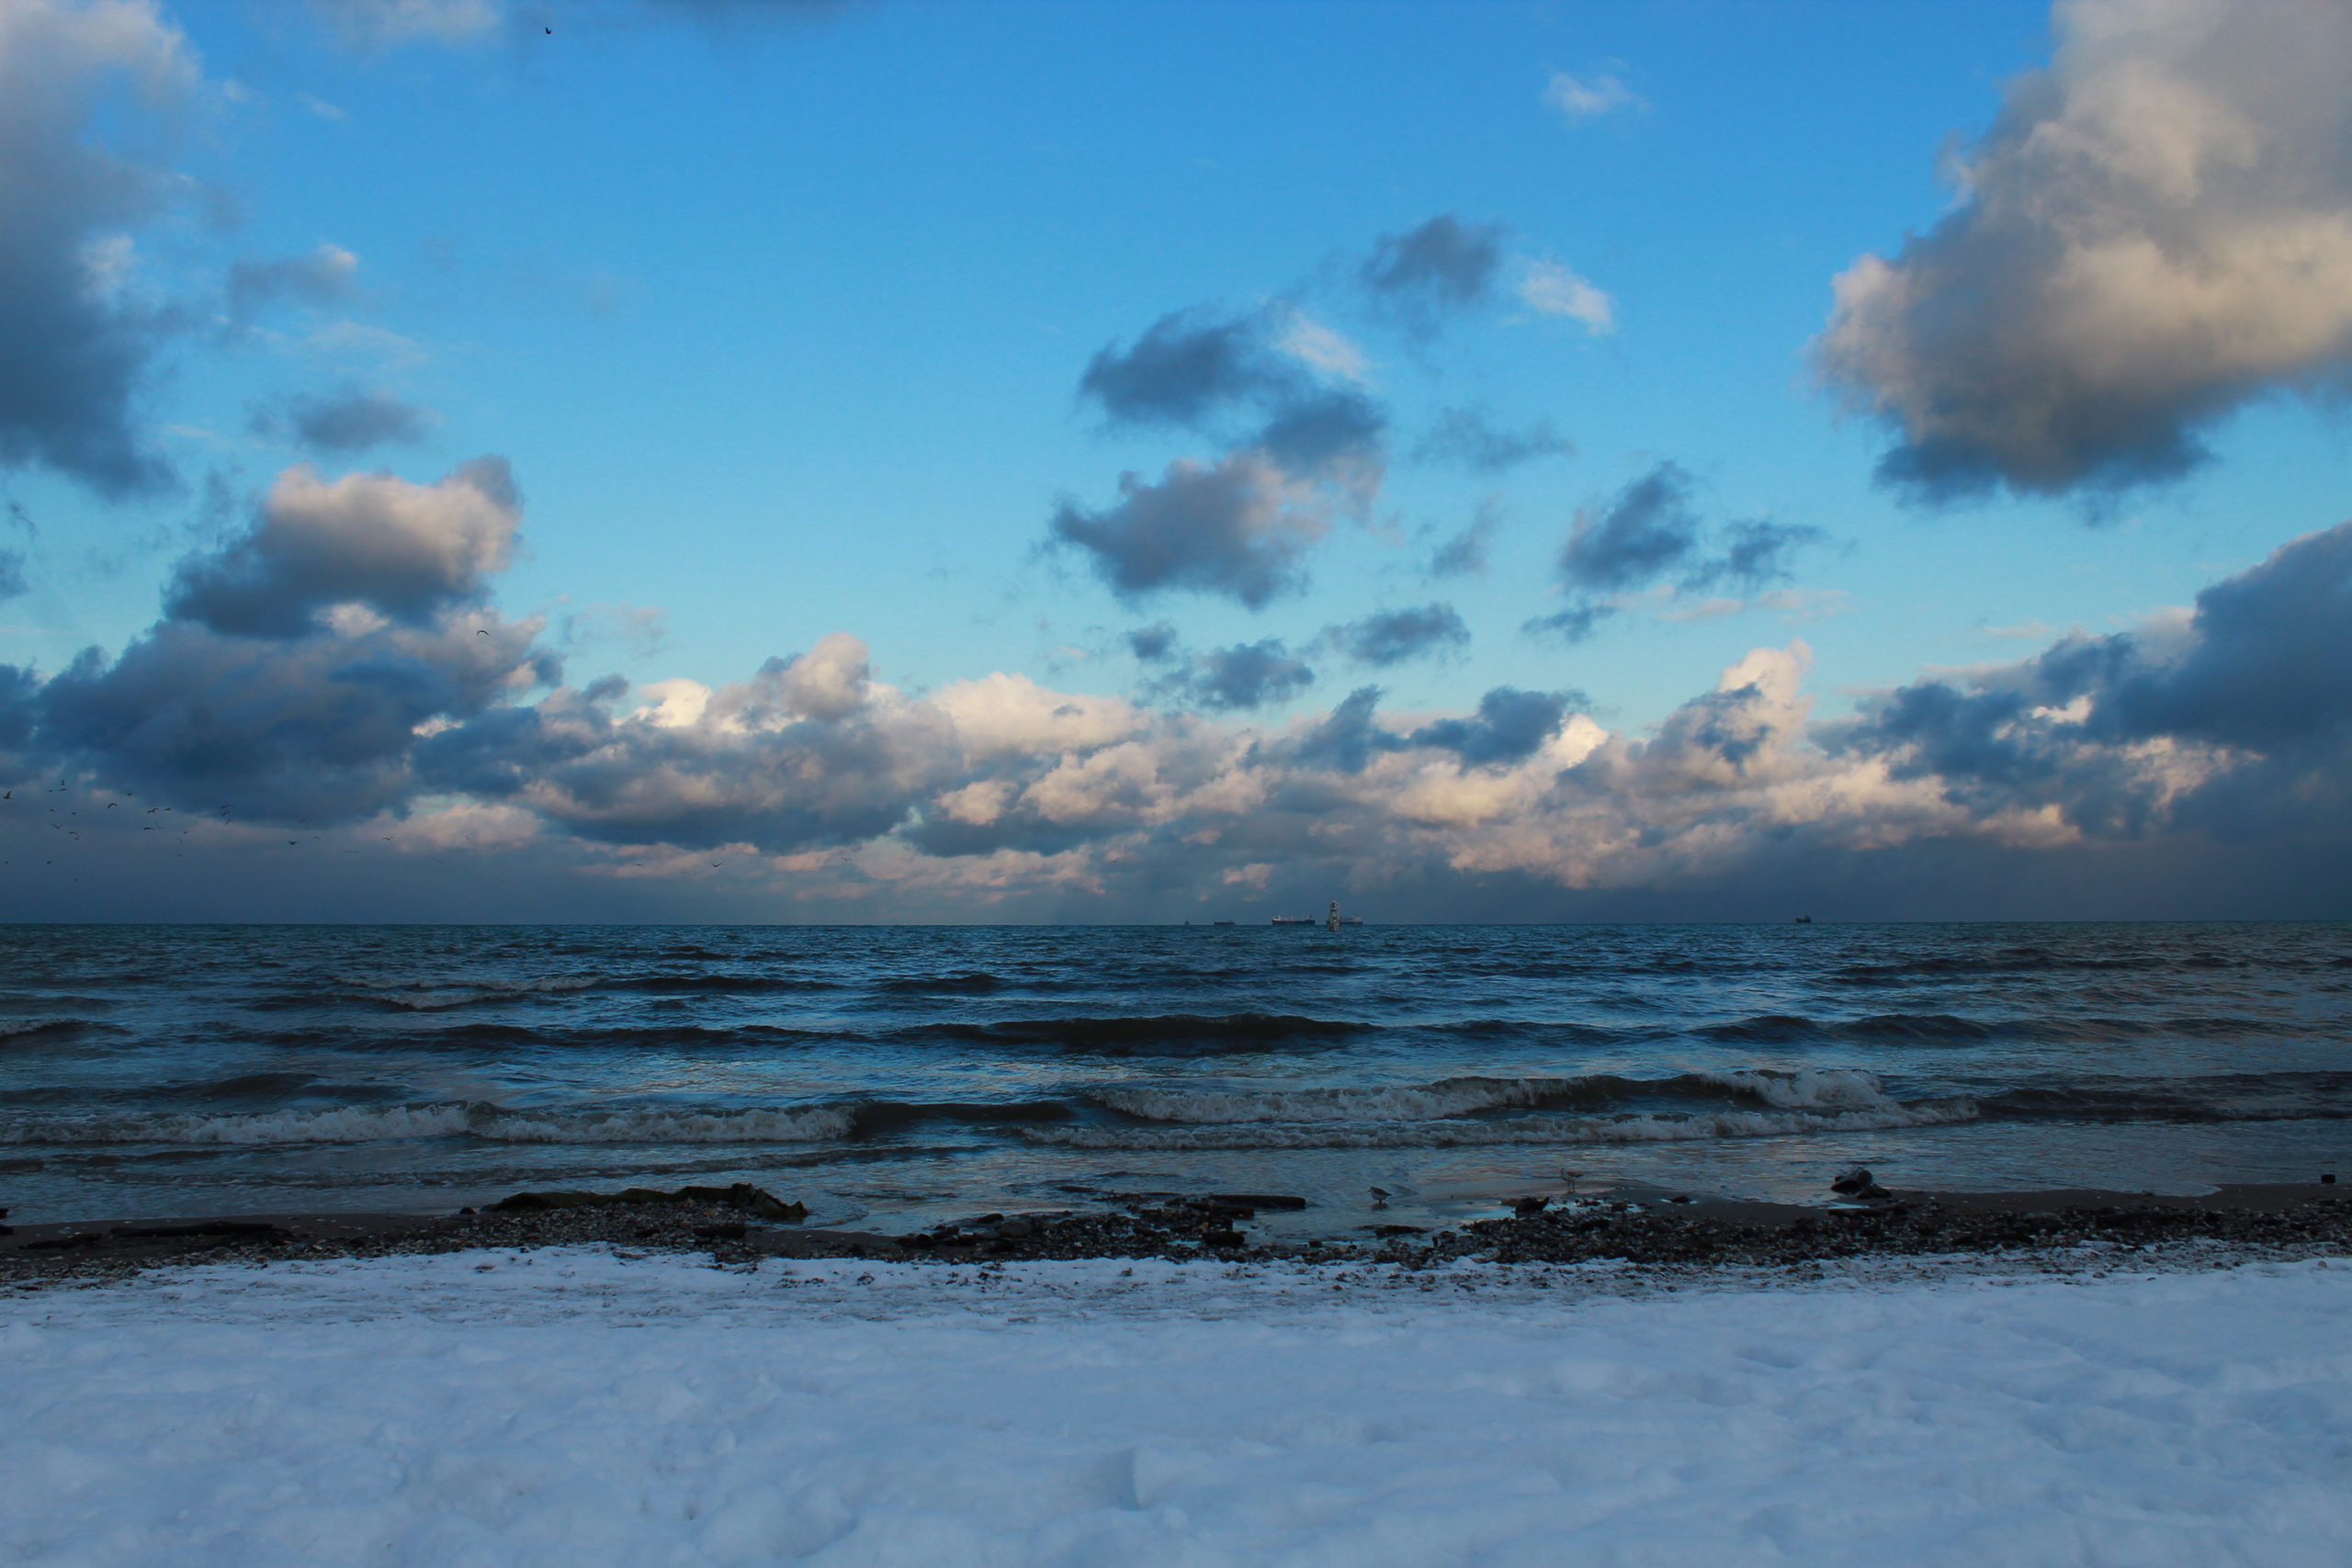 widok na chmury, dale na morzu i śnieg na plaży